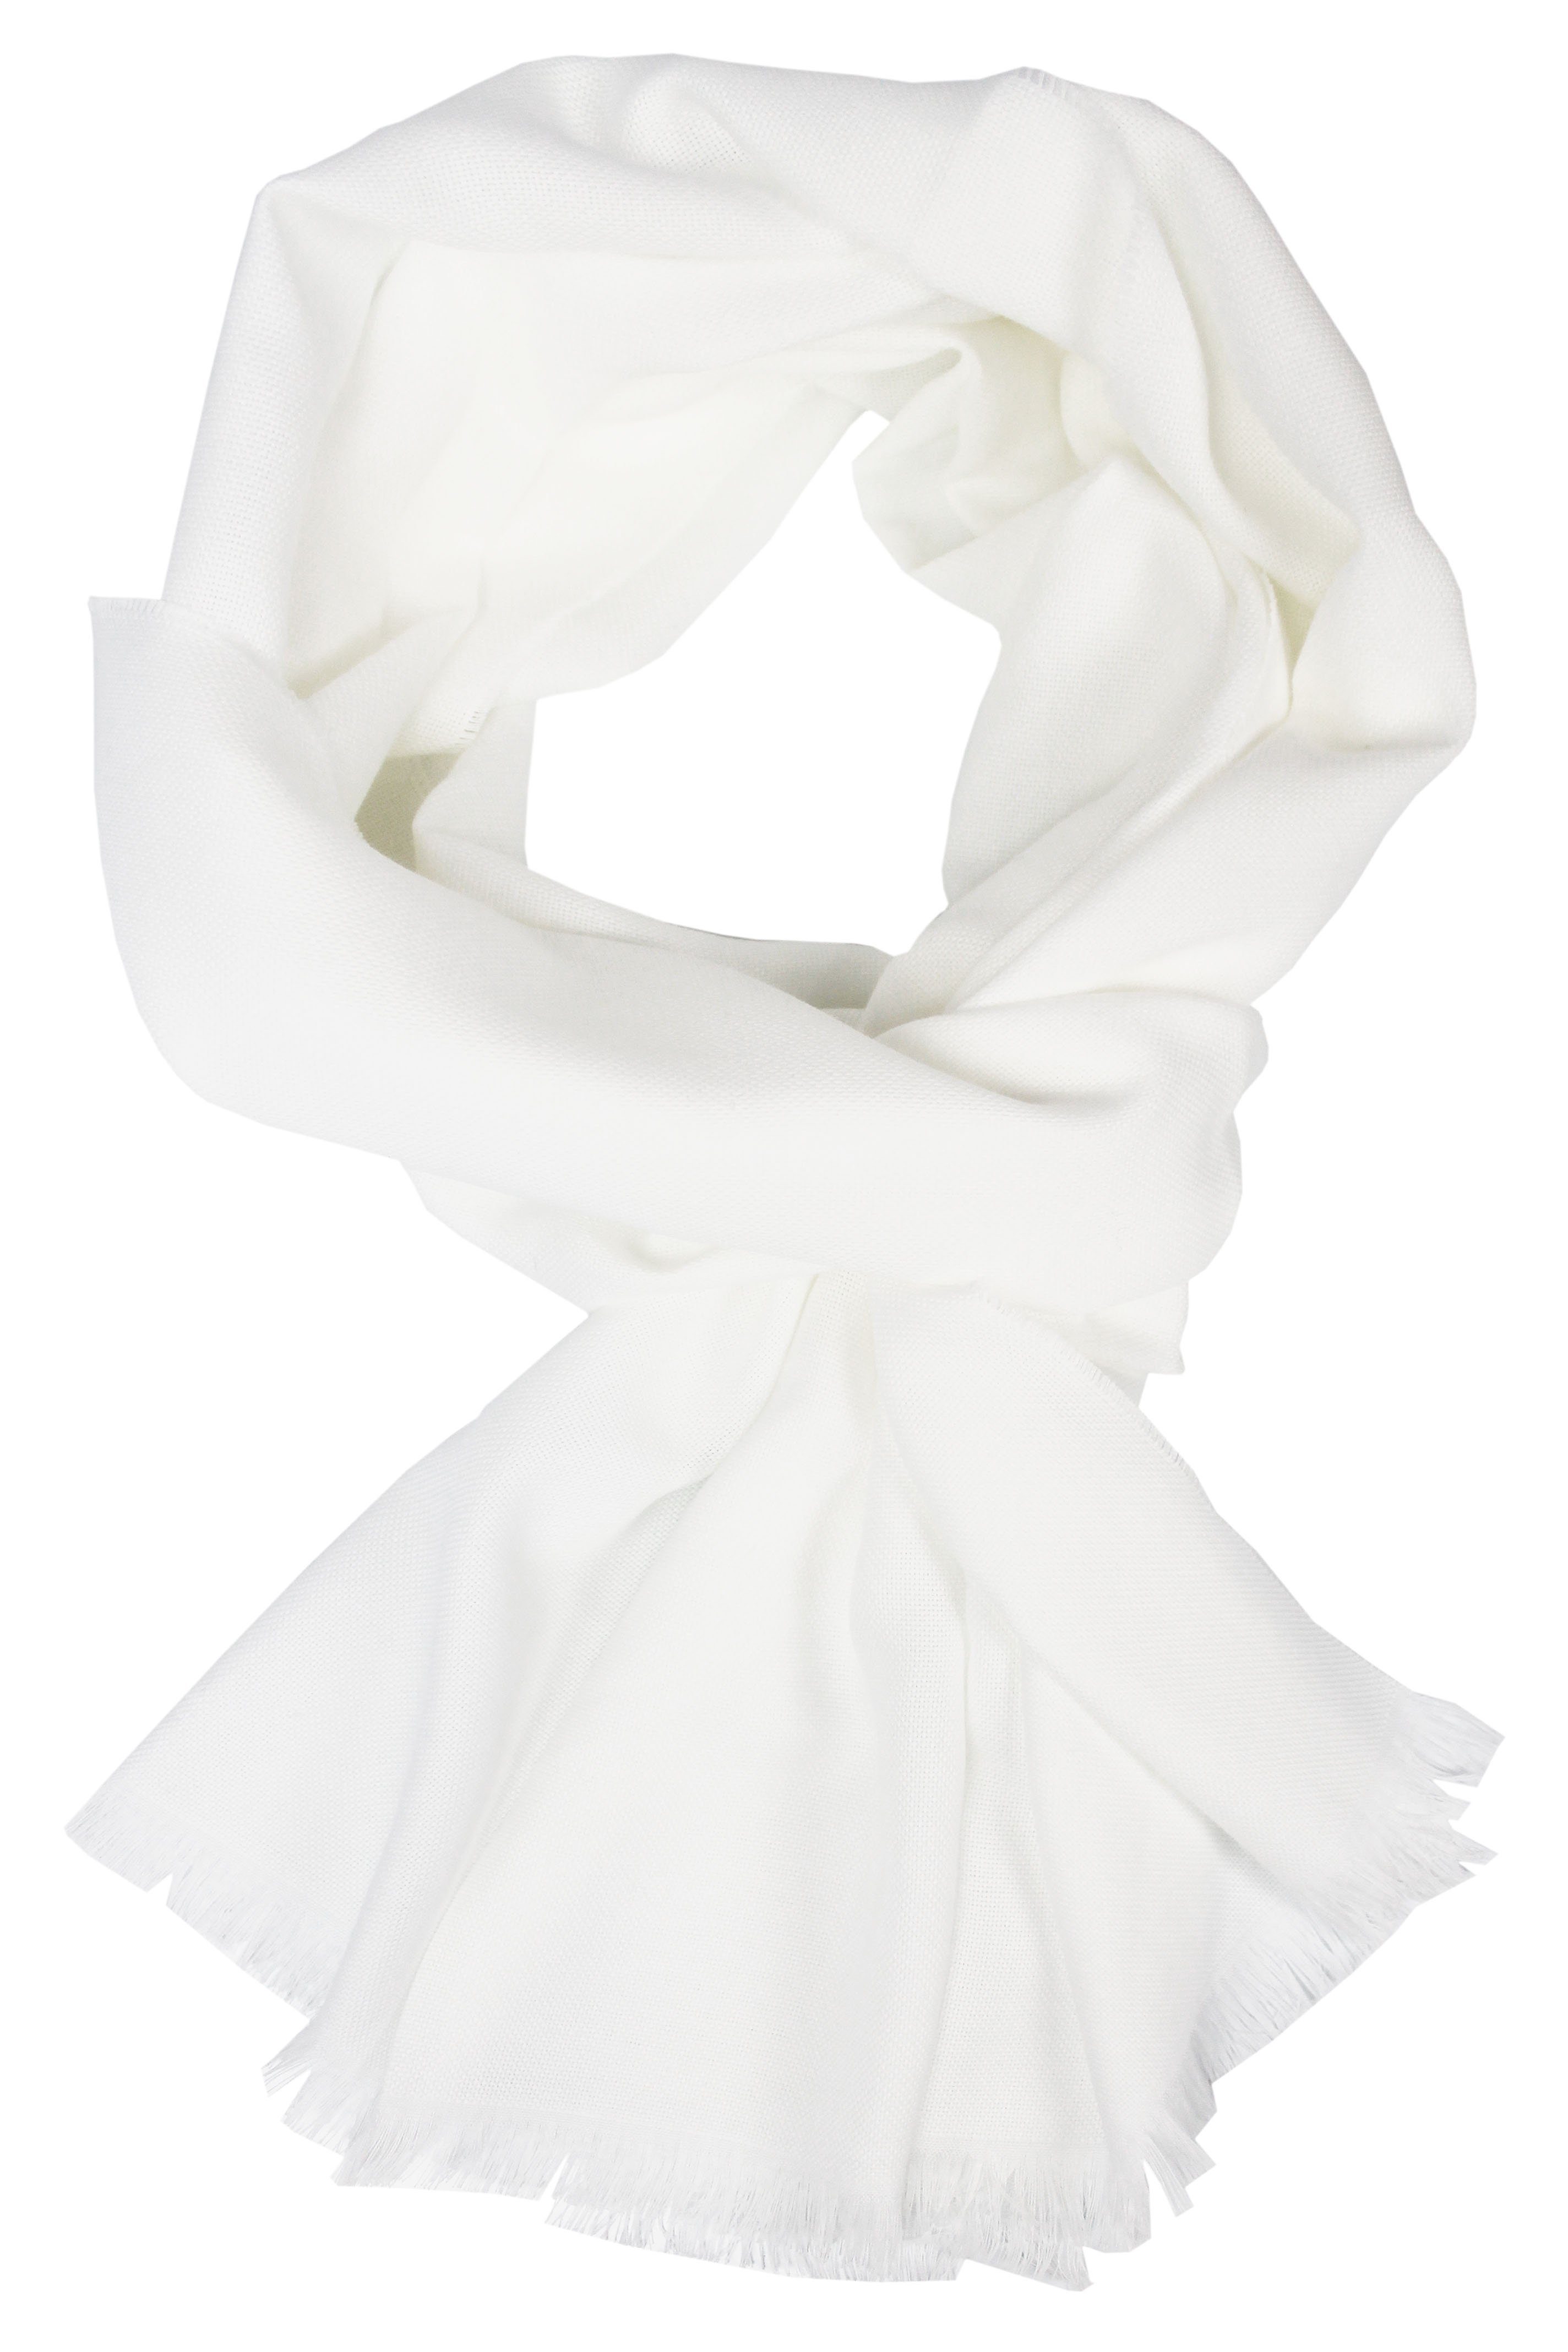 Rotfuchs Panamabindung Modeschal unifarben in Baumwollschal weiß